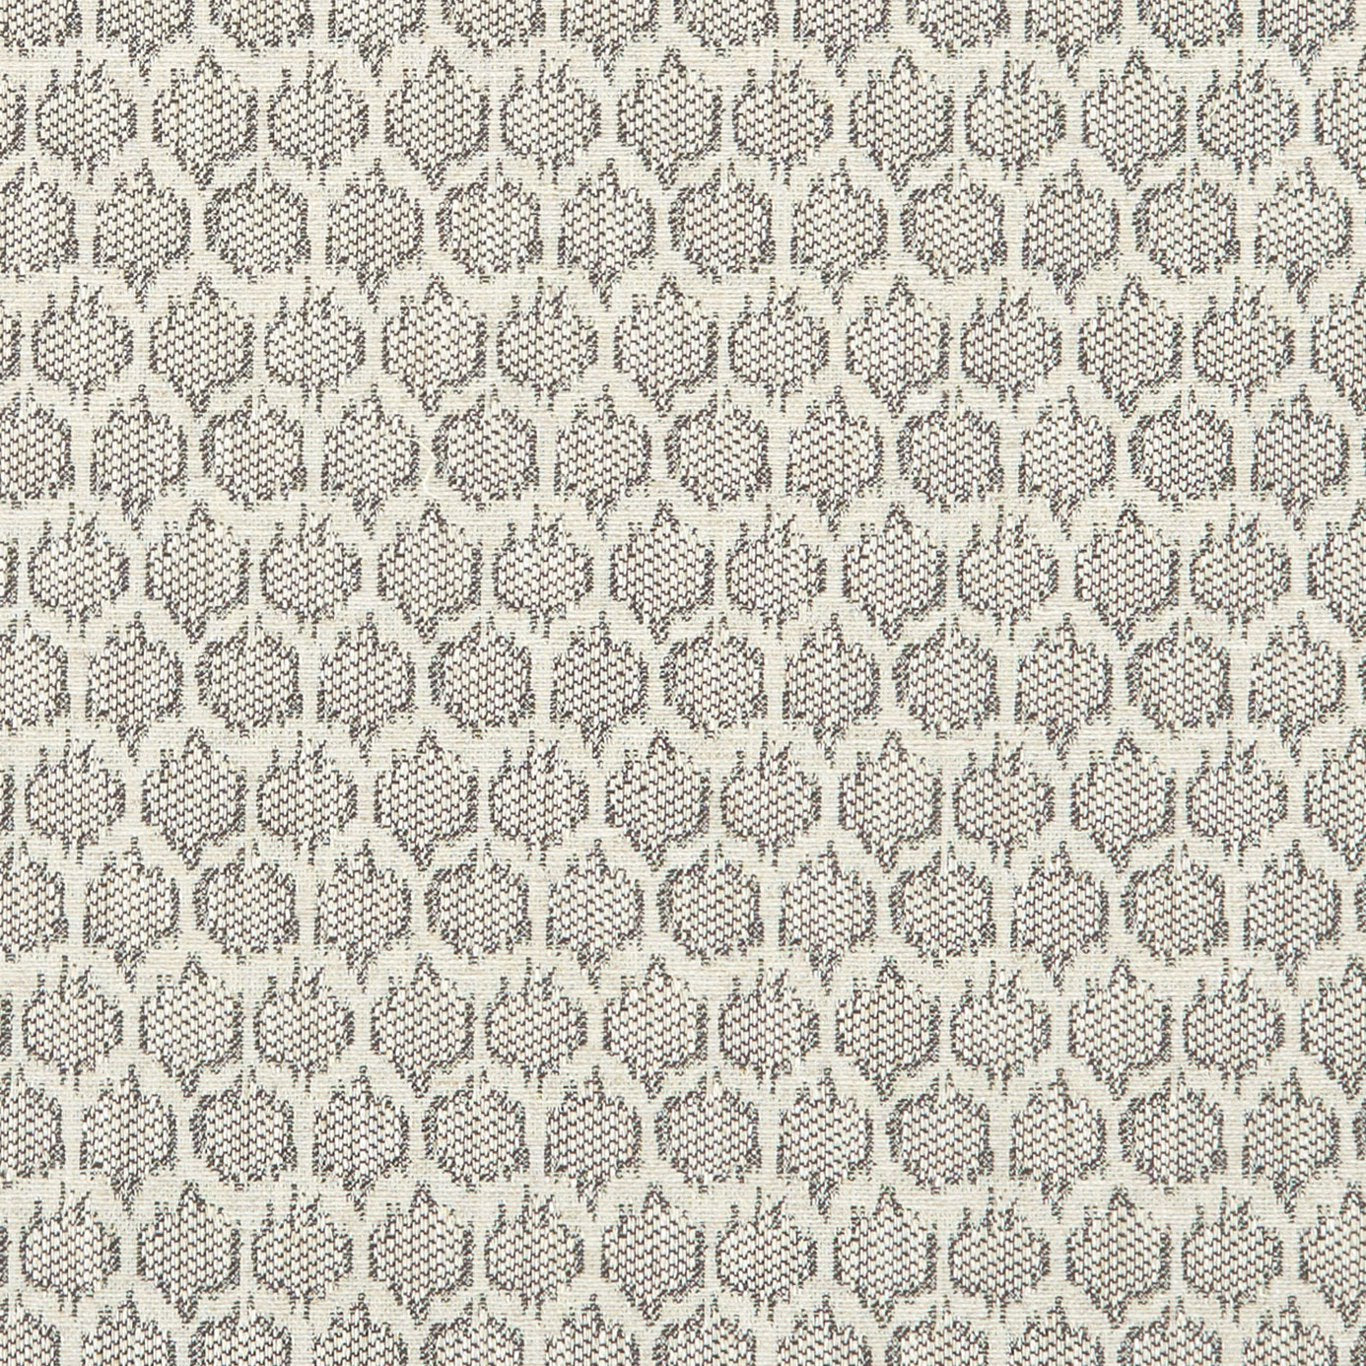 Dorset Fabric by Clarke & Clarke - F1178/07 - Natural